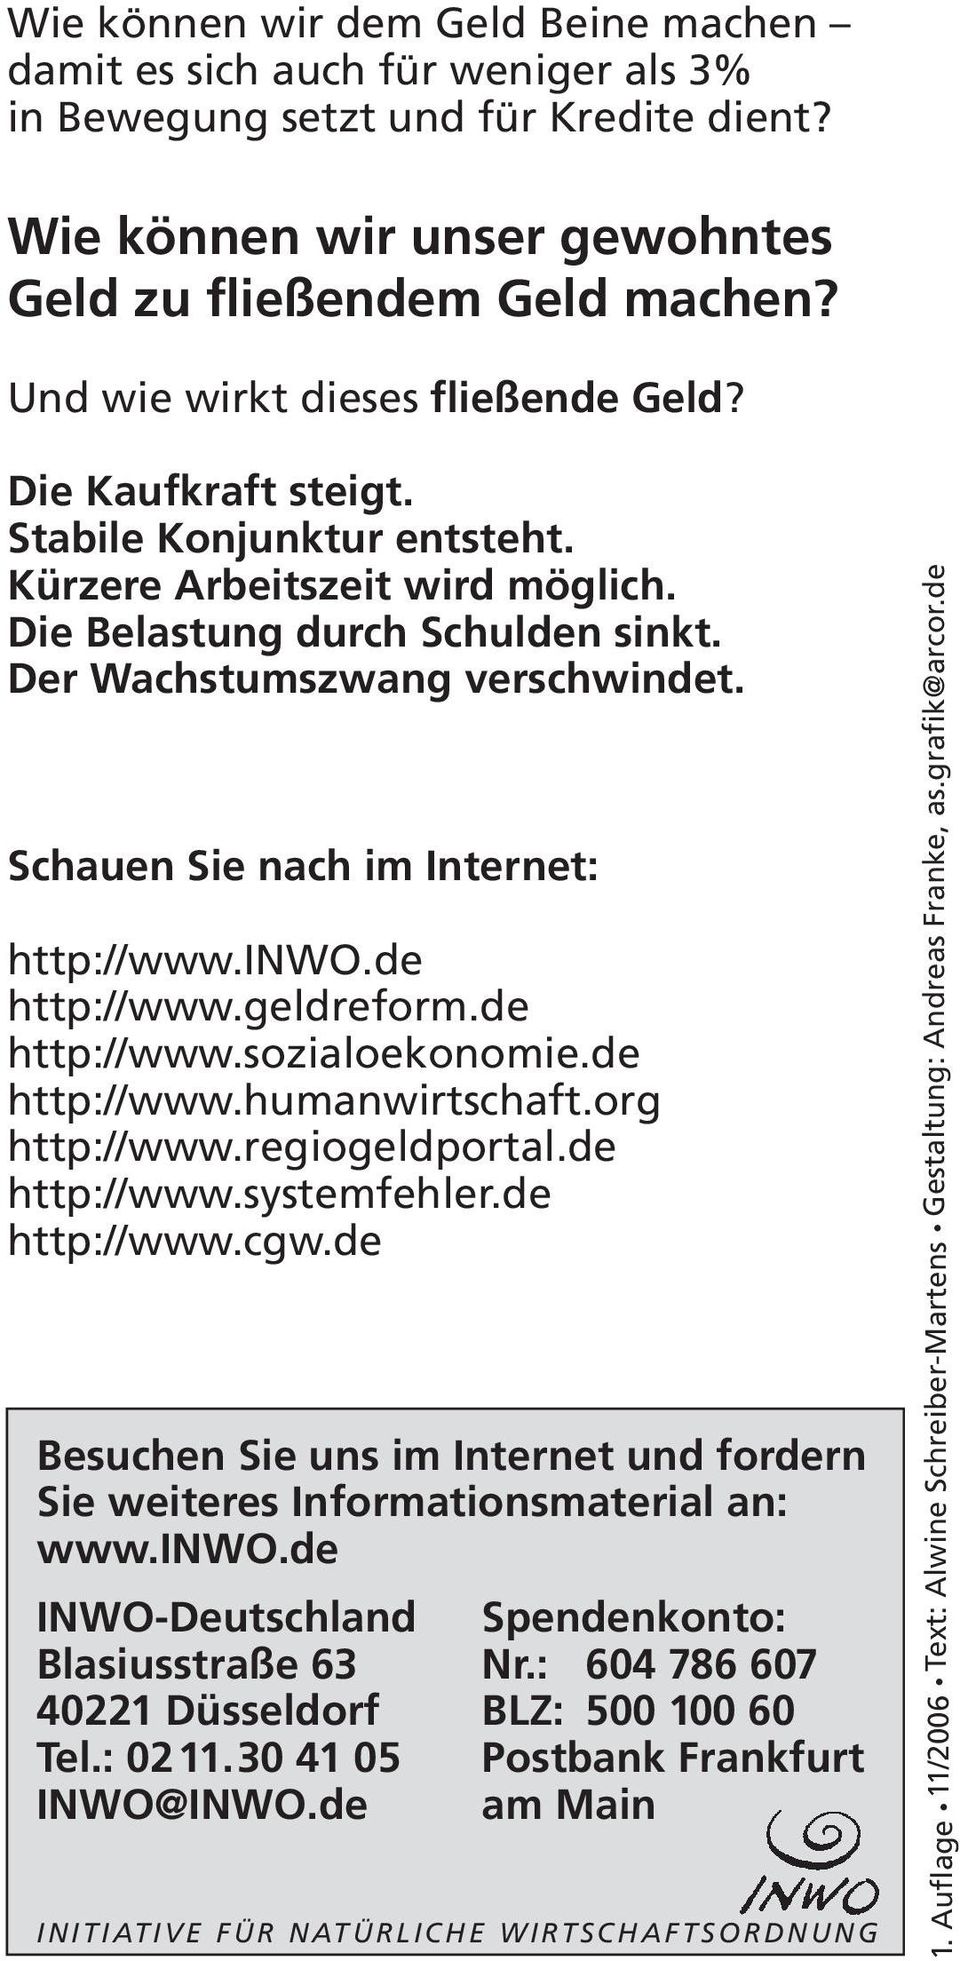 Schauen Sie nach im Internet: http://www.inwo.de http://www.geldreform.de http://www.sozialoekonomie.de http://www.humanwirtschaft.org http://www.regiogeldportal.de http://www.systemfehler.